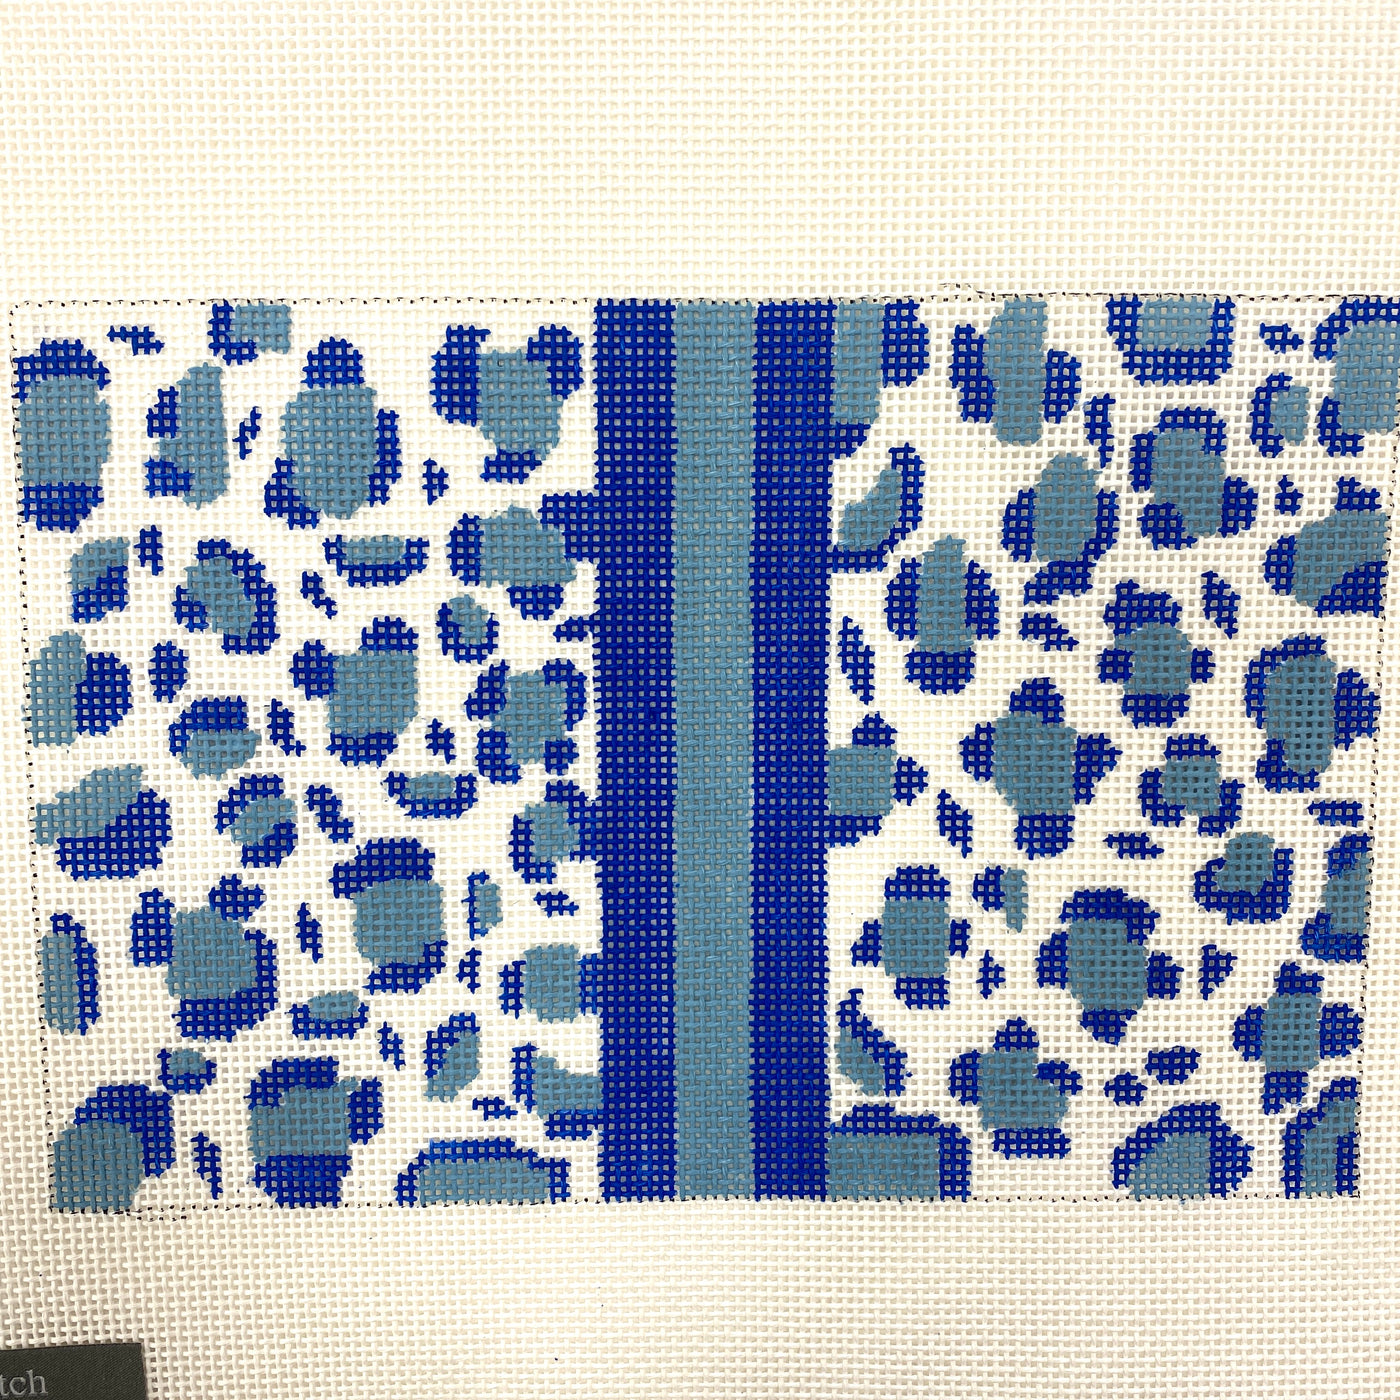 Leopard Clutch-Blue Silver Stitch Handpainted Needlepoint Canvas 